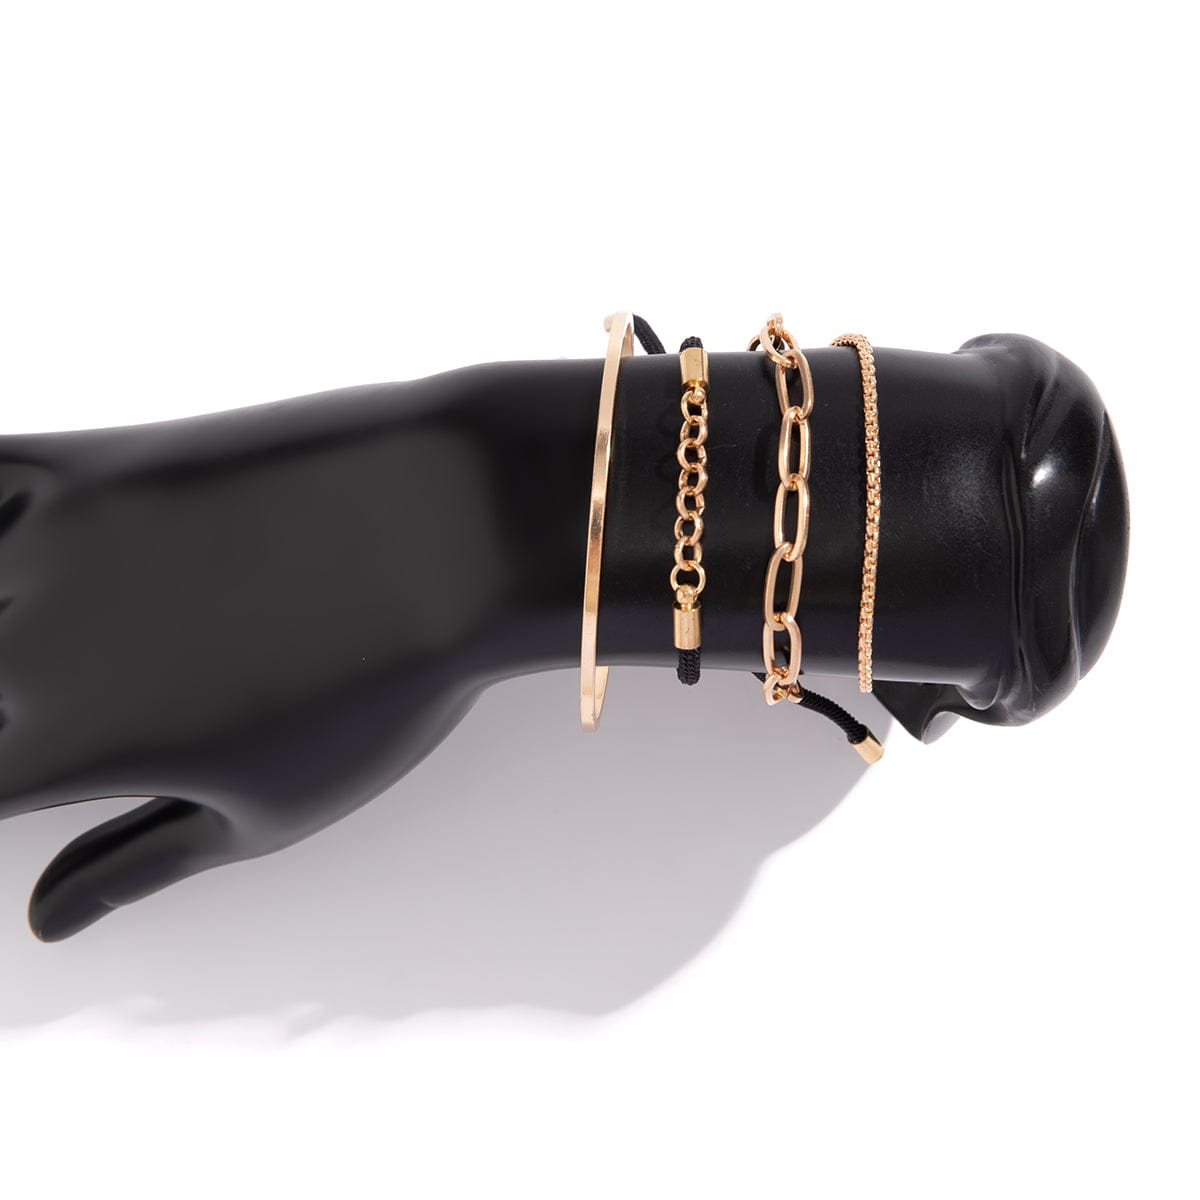 Chic Layered Knotted String Box Chain Bangle Bracelet Set - ArtGalleryZen